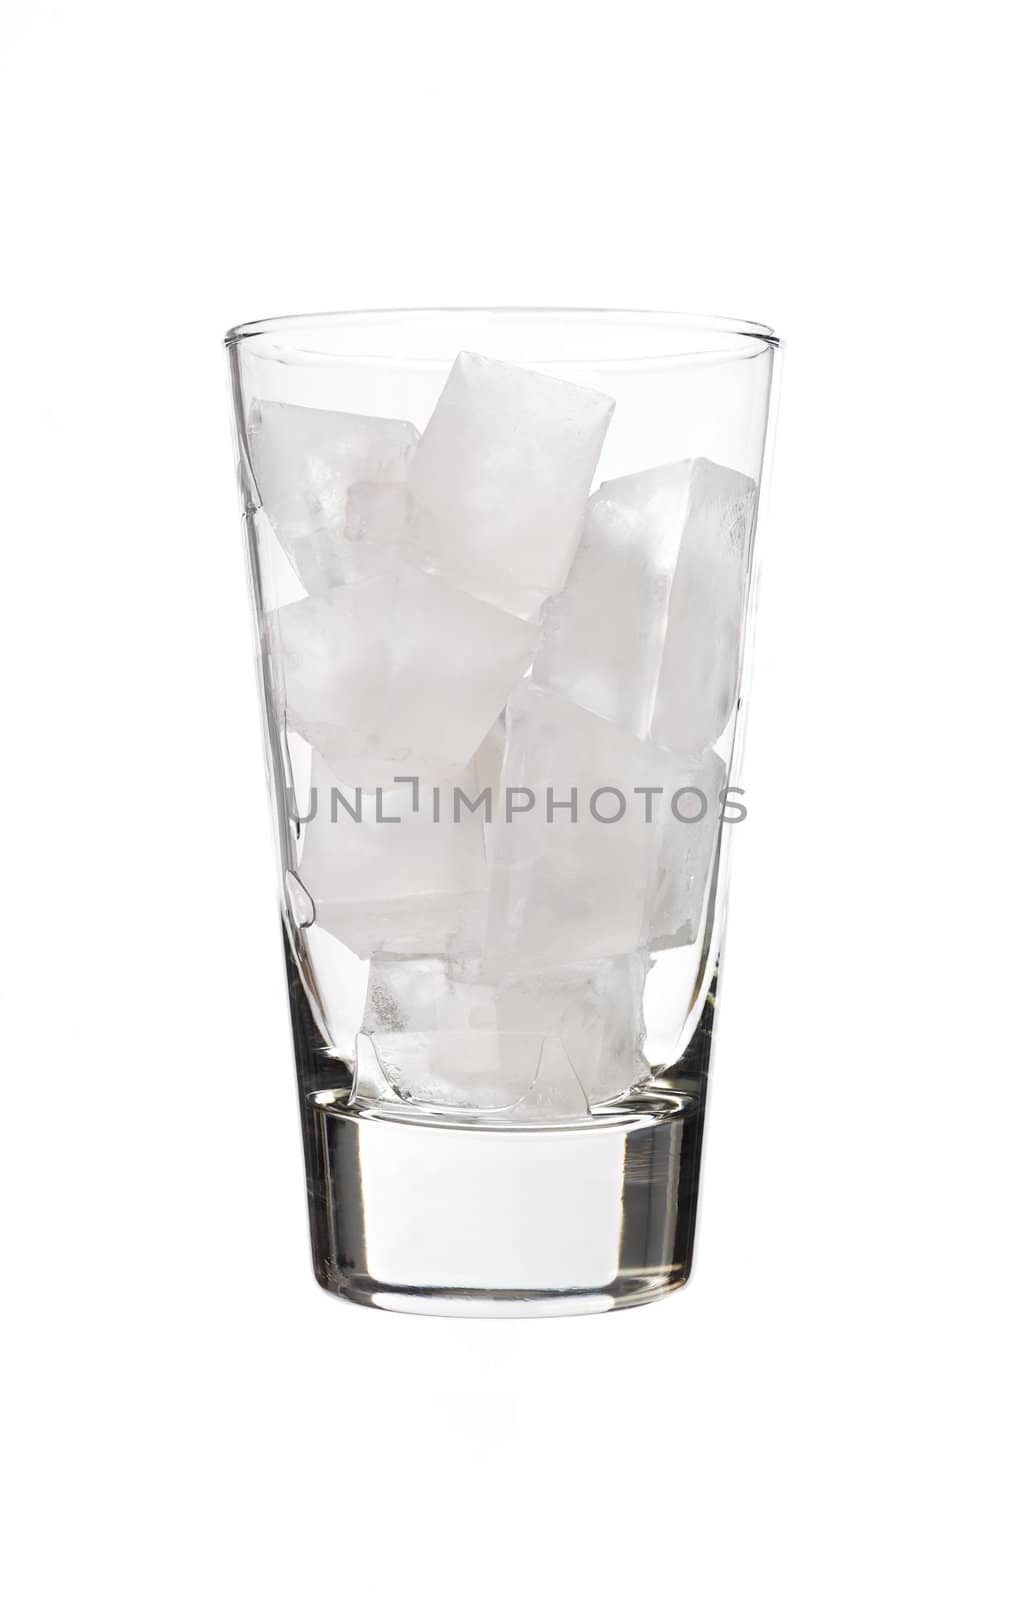 Glass with ice by gemenacom